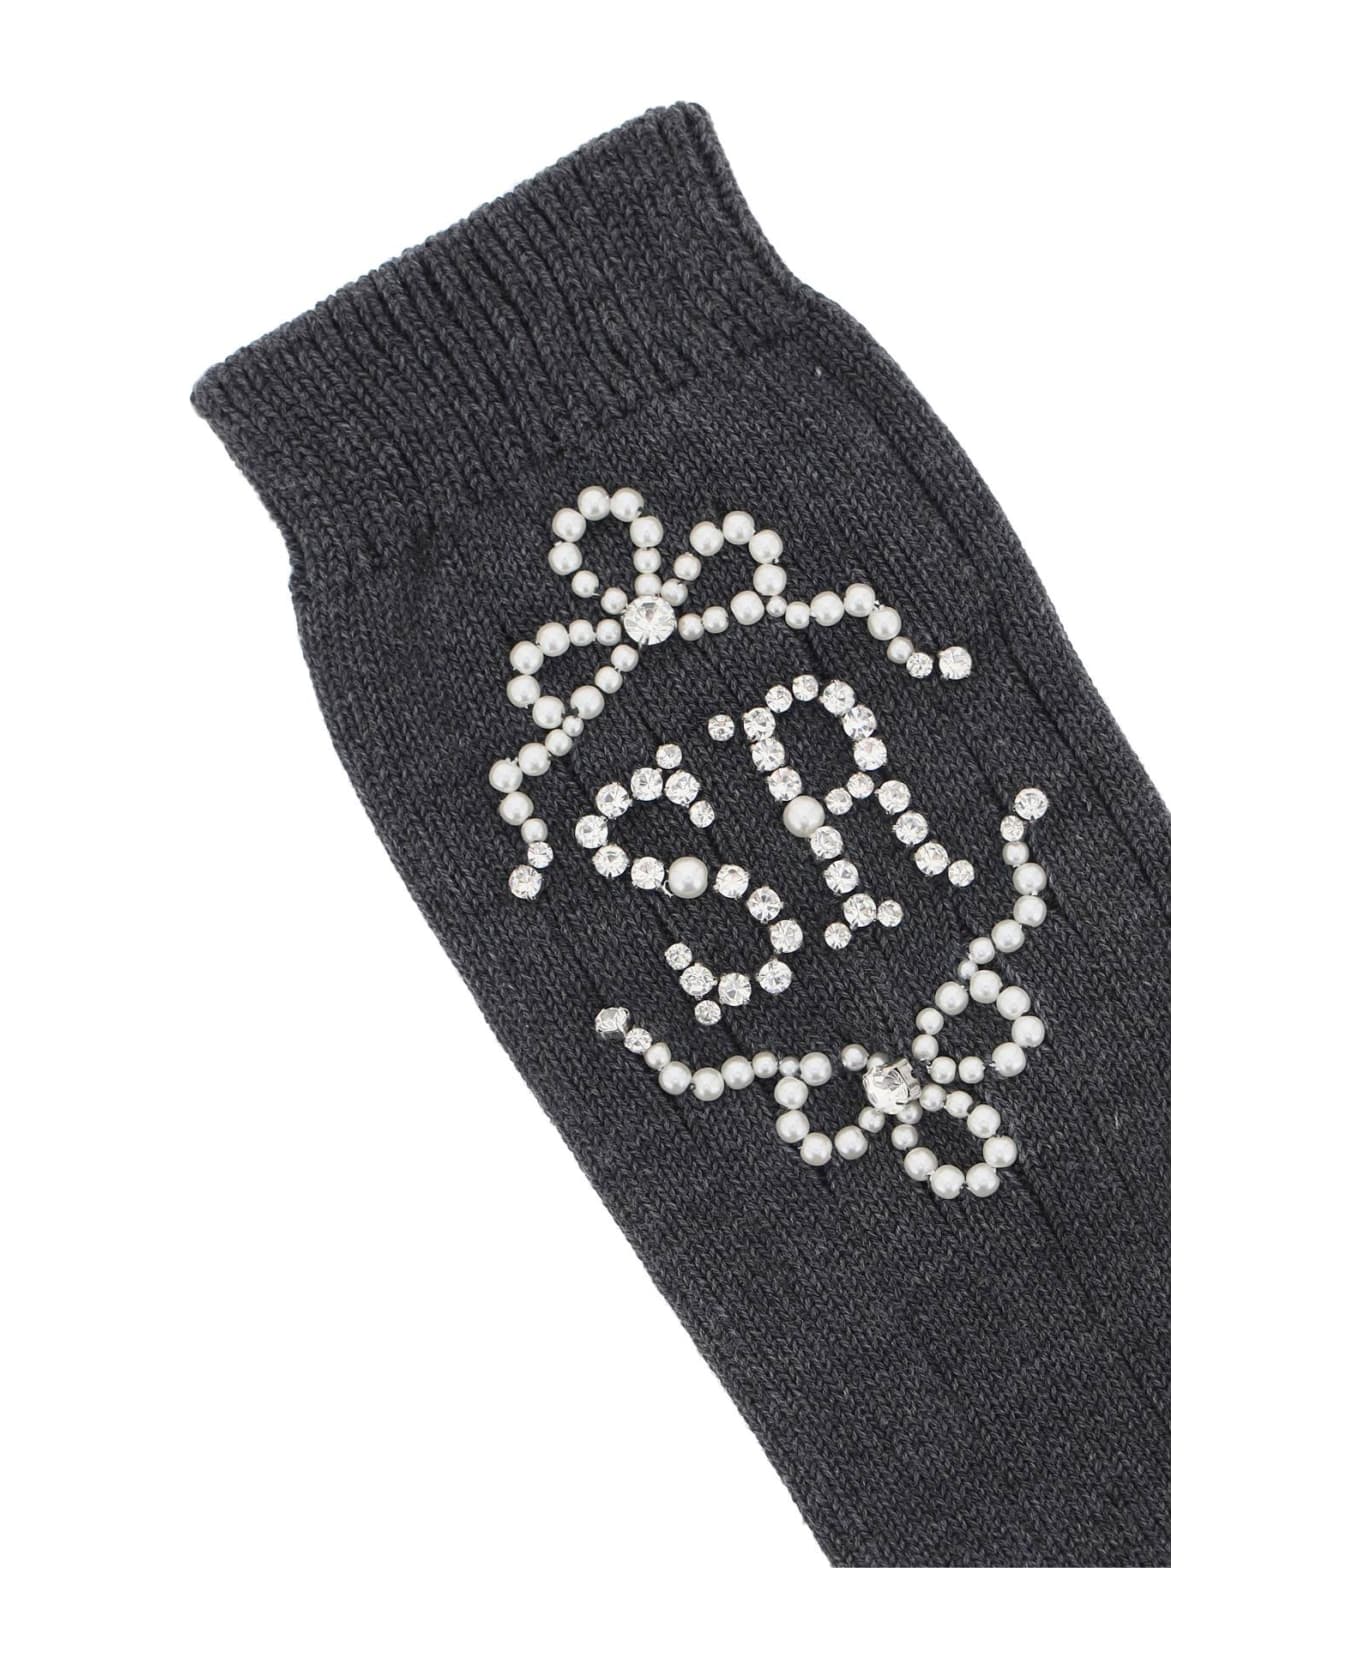 Simone Rocha Sr Socks With Pearls And Crystals - GREY MELANGE PEARL CRYSTAL (Grey)